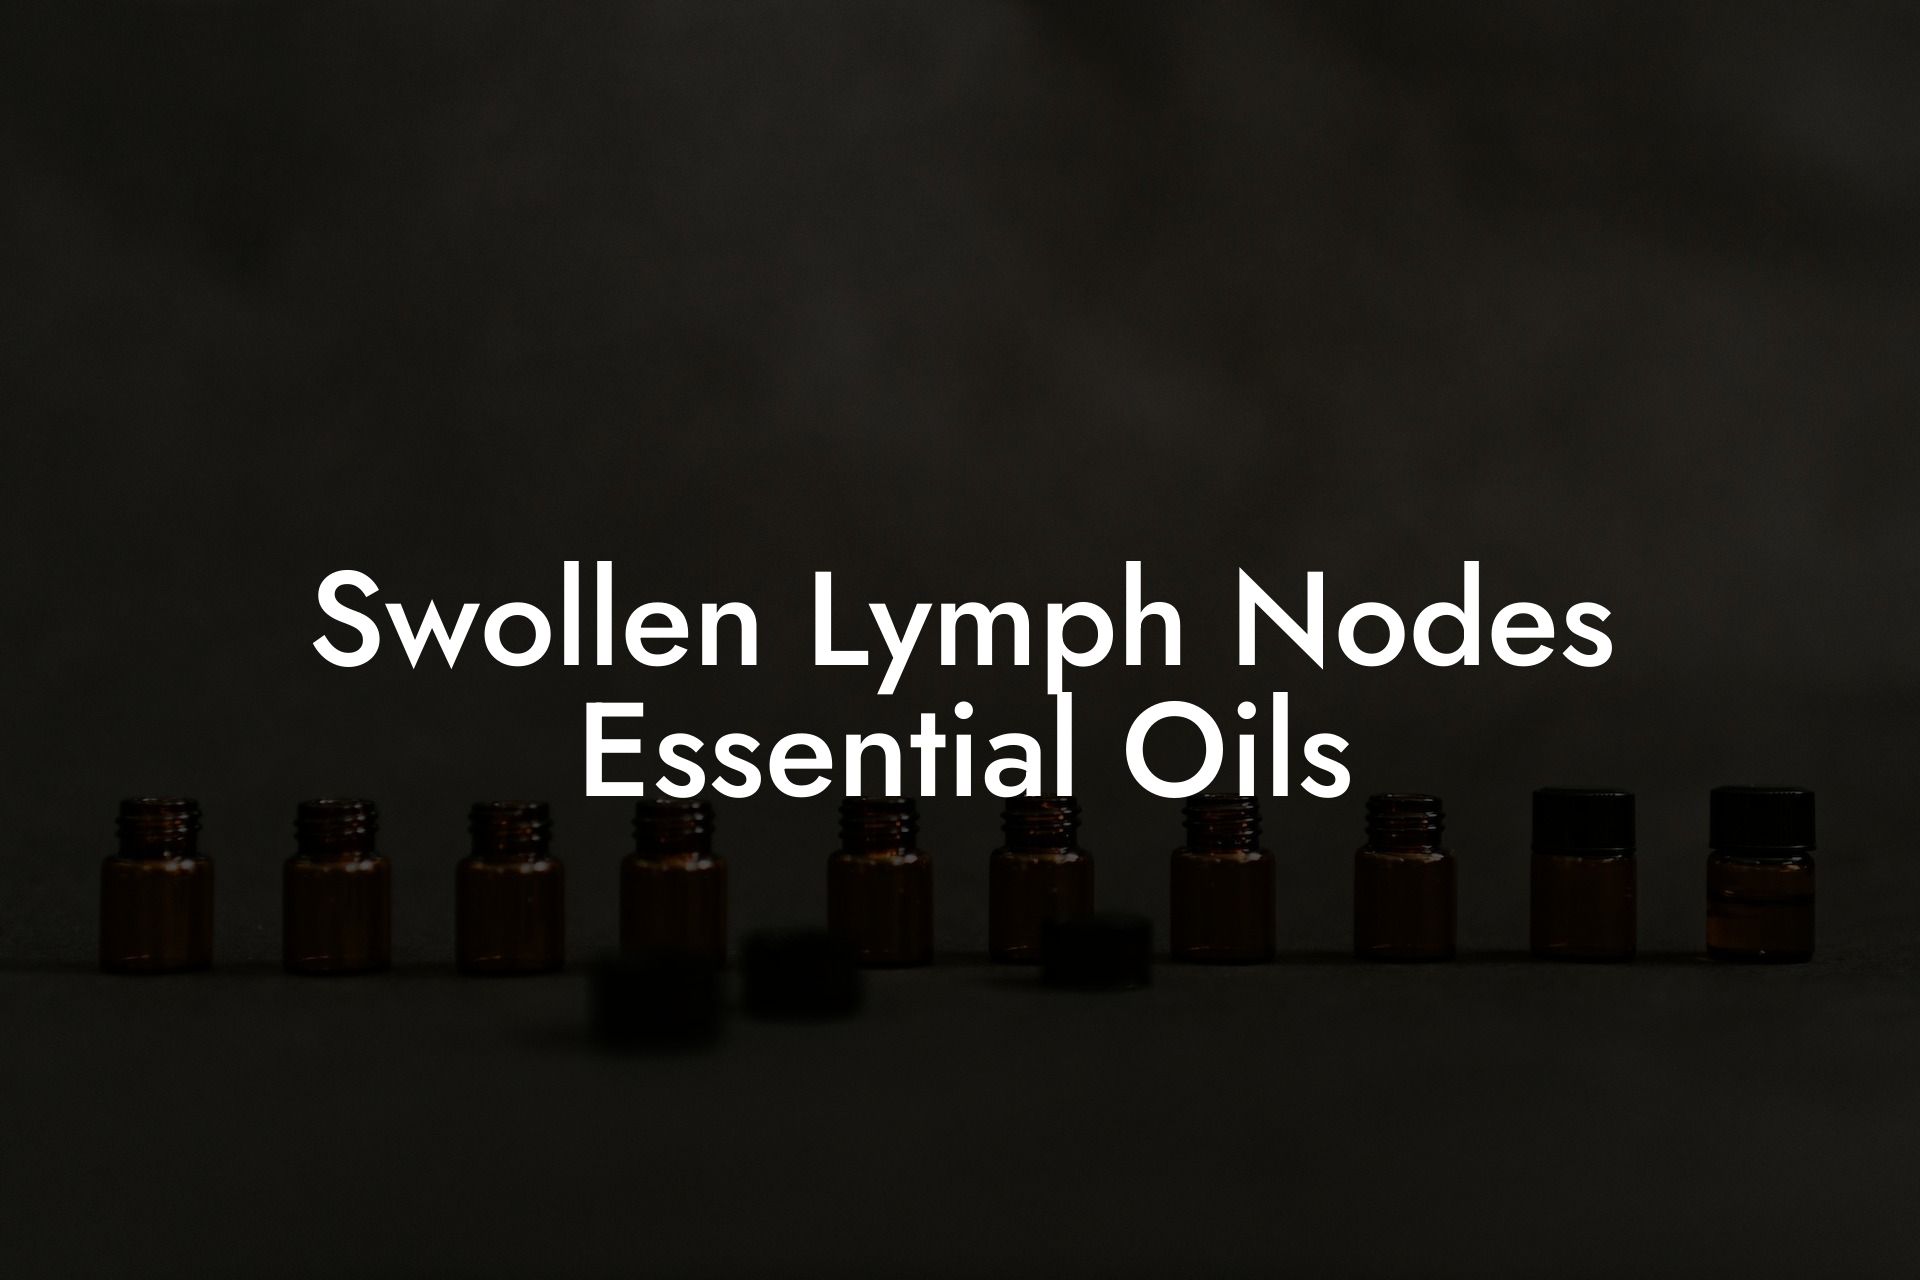 Swollen Lymph Nodes Essential Oils